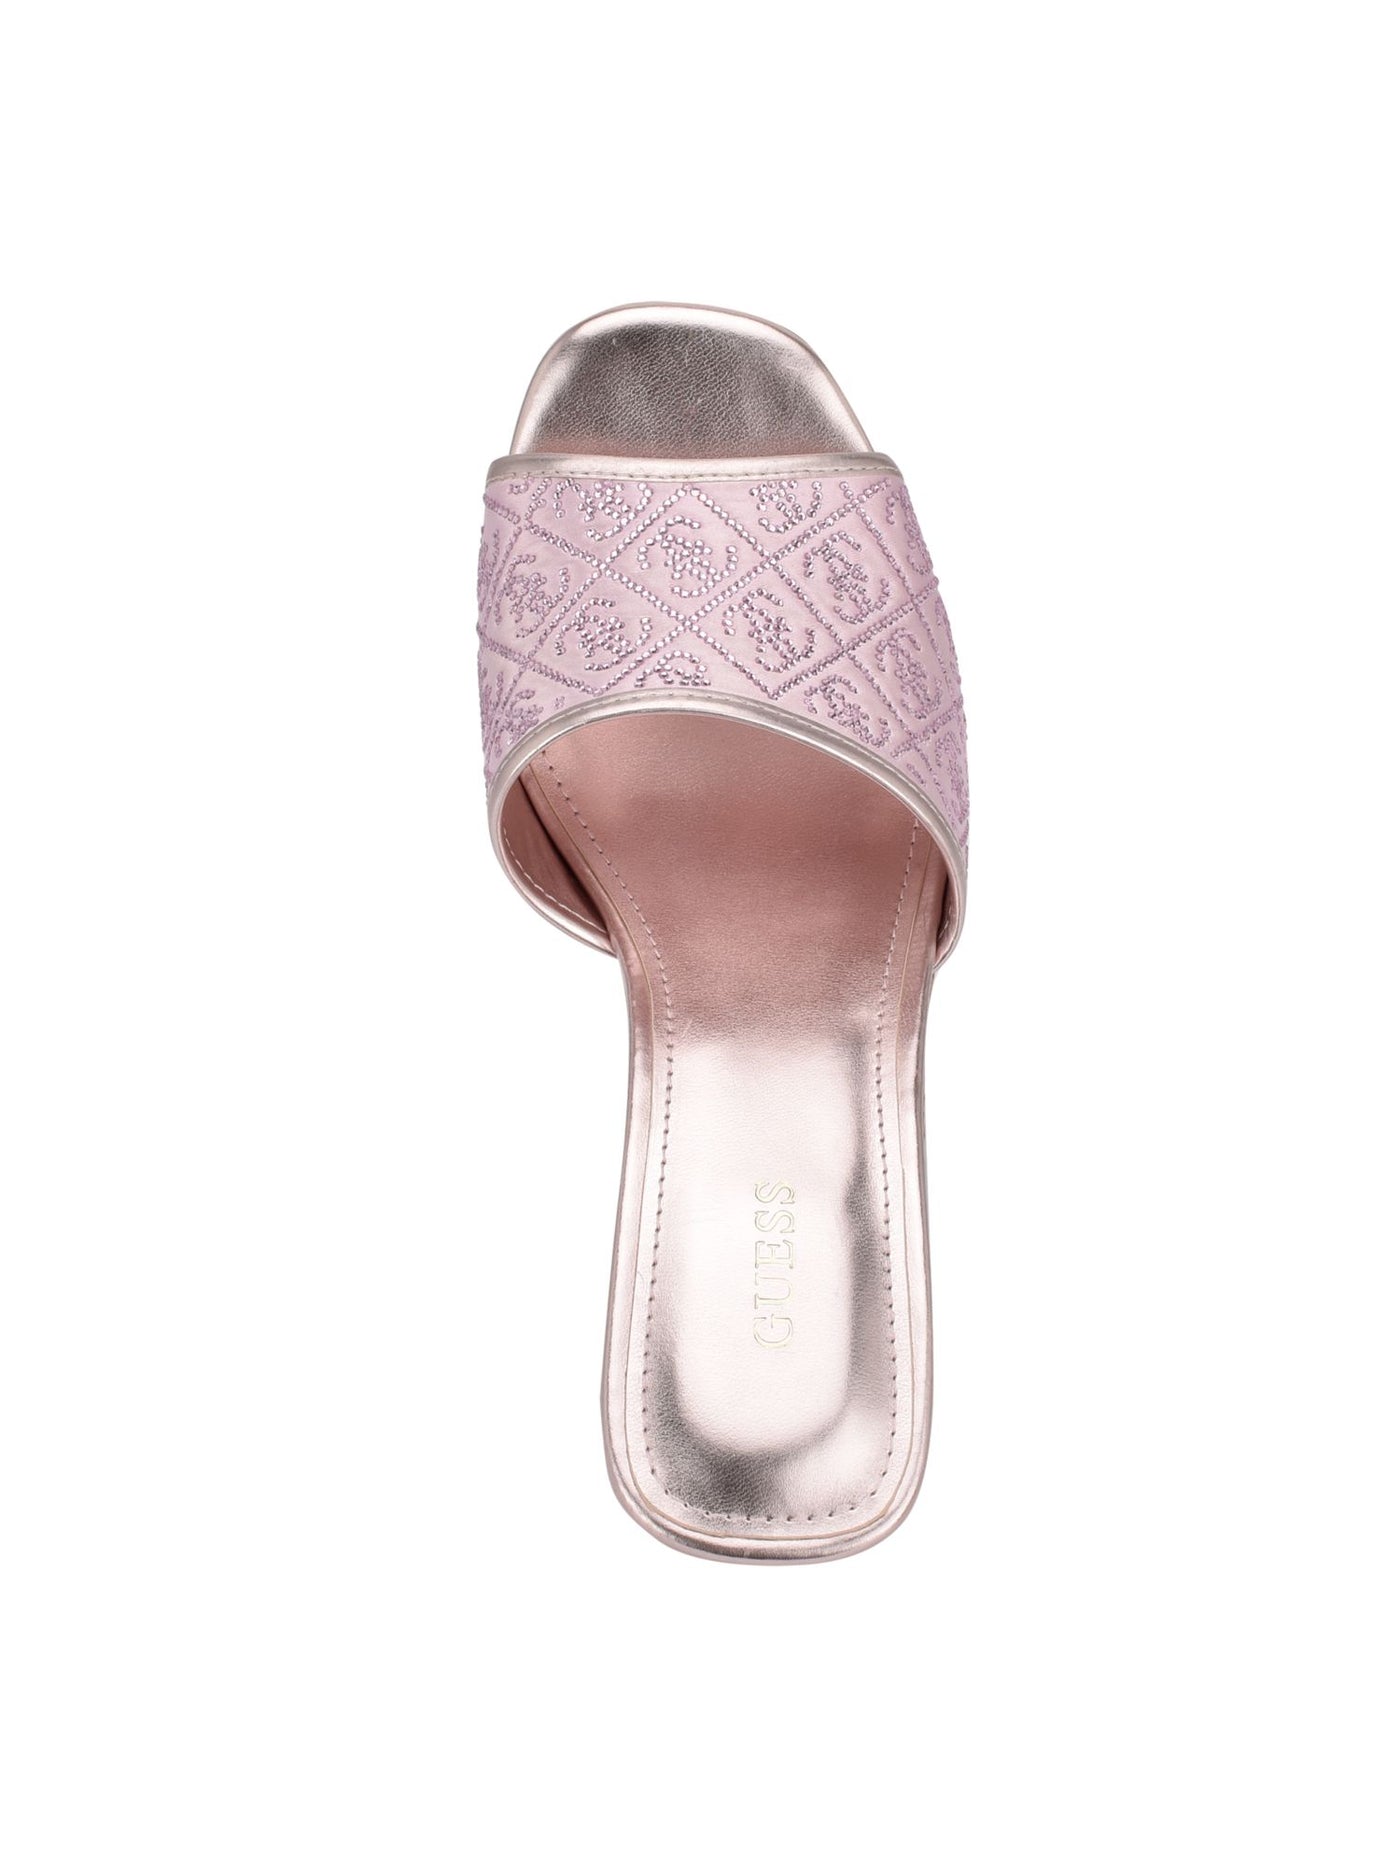 GUESS Womens Pink Rhinestone Cork 2" Platform Padded Metallic Catiaee Round Toe Wedge Slip On Heeled Sandal 6.5 M